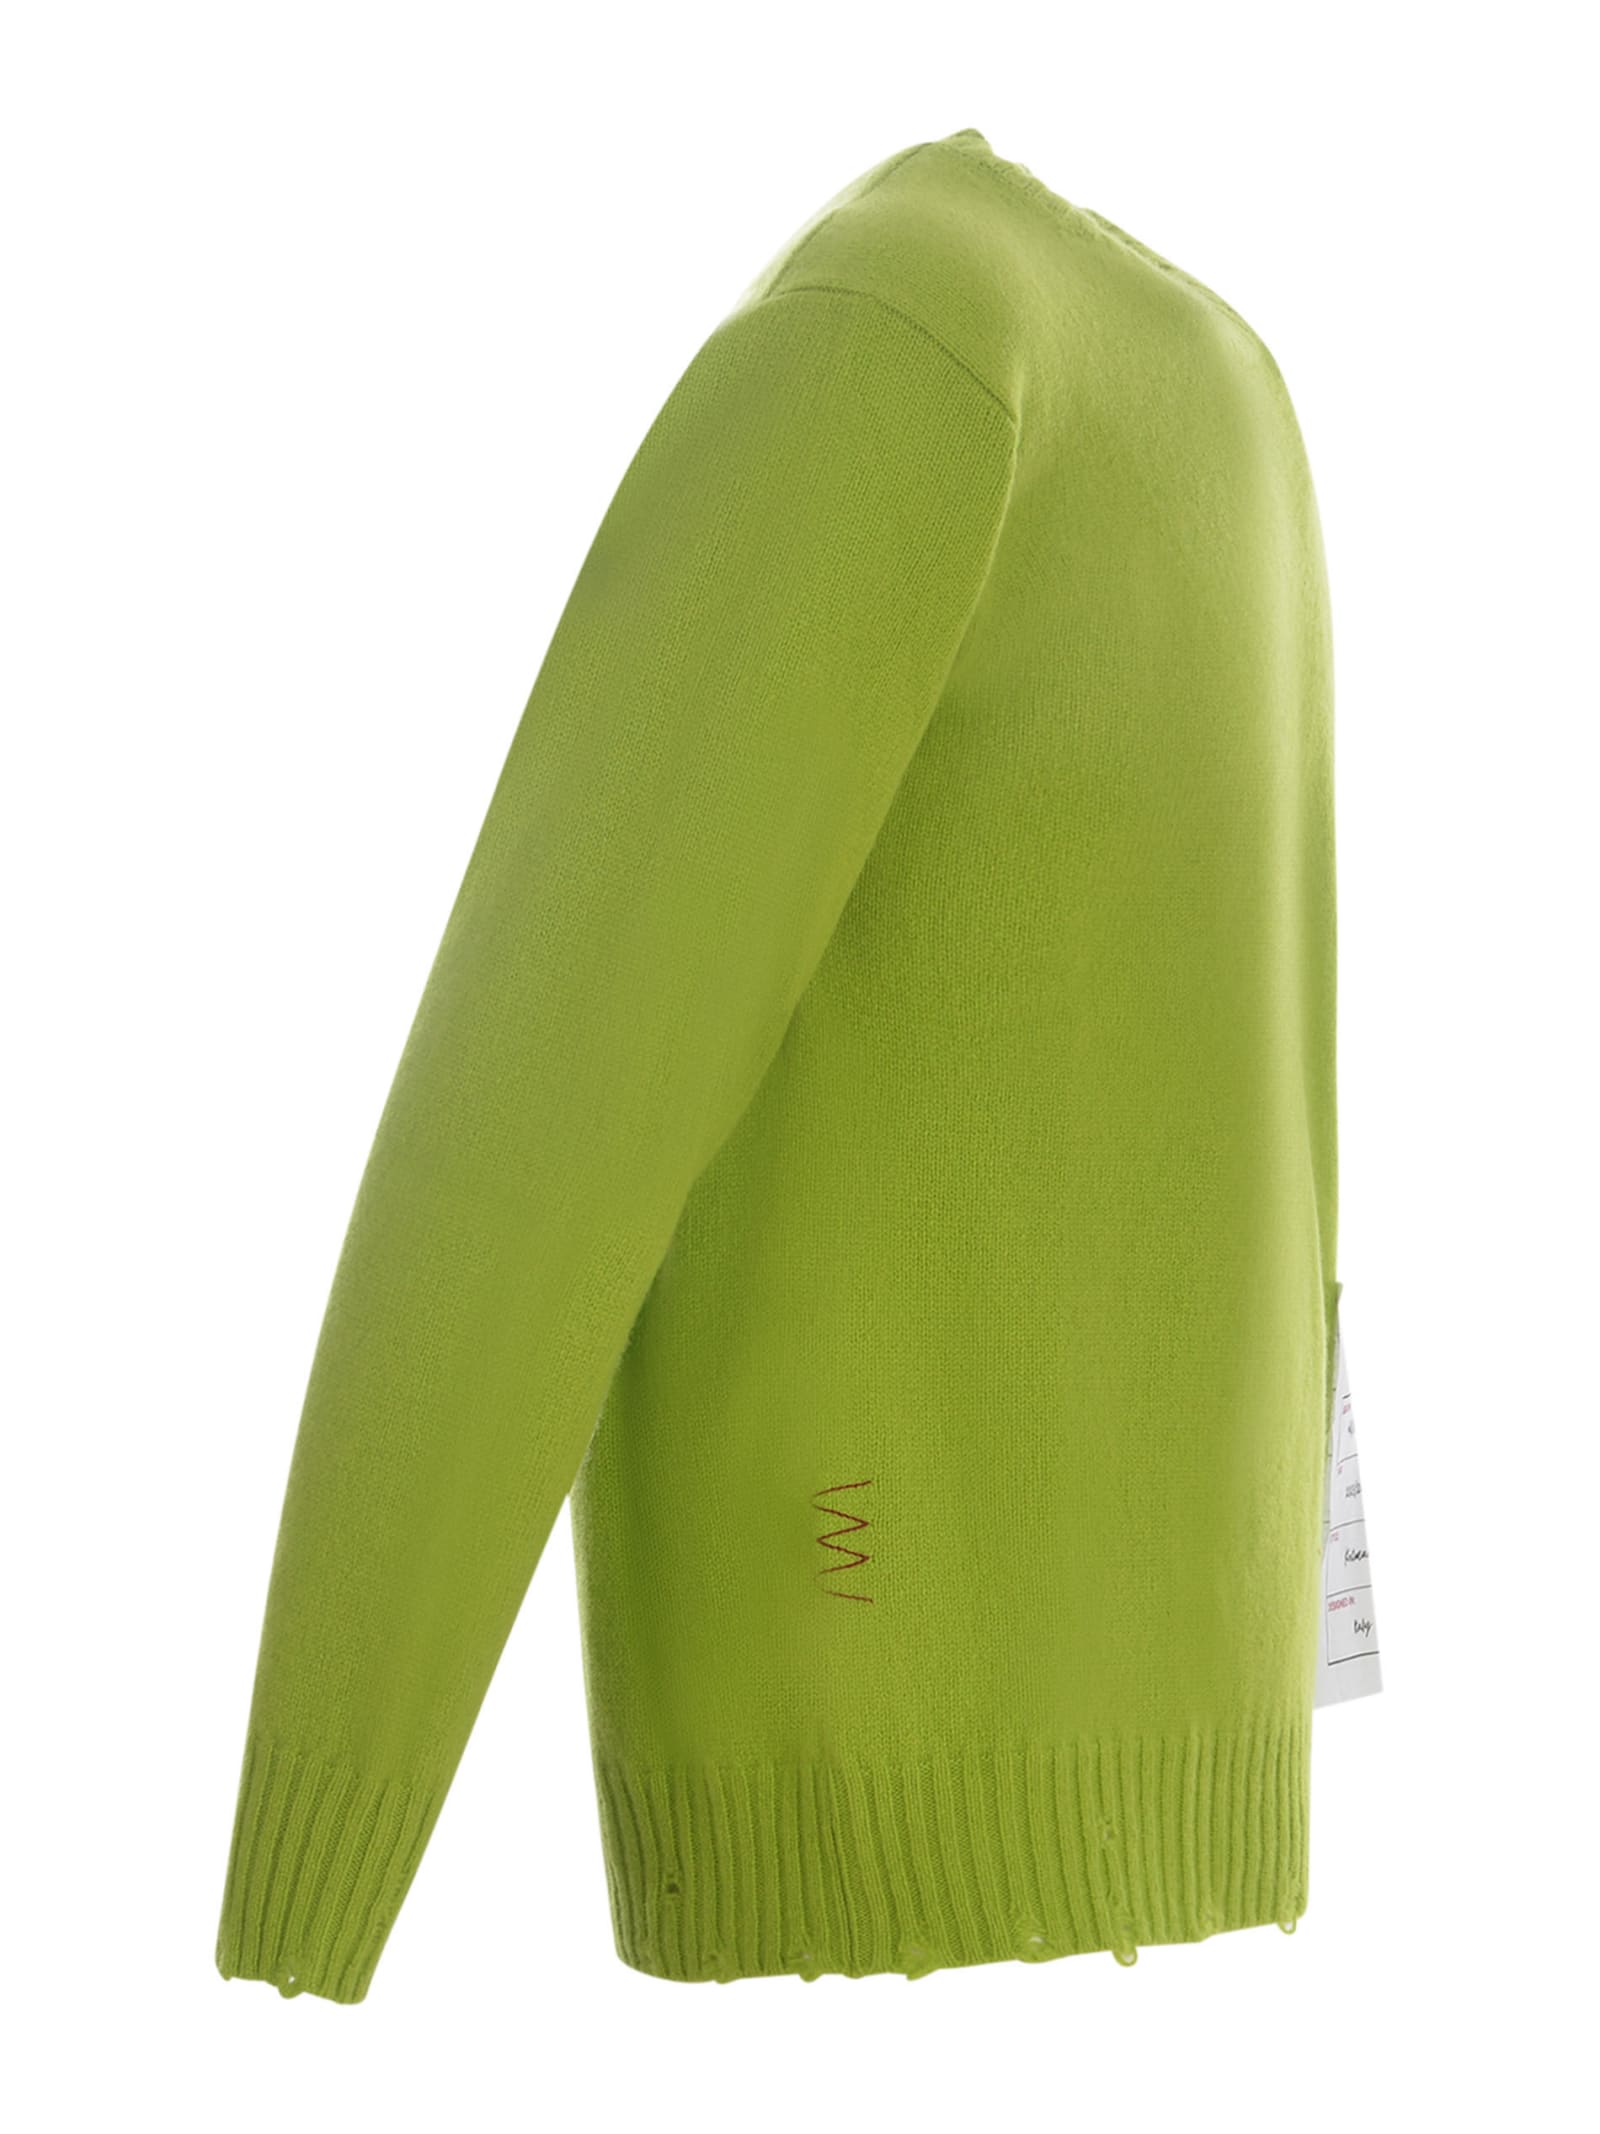 Shop Amaranto Sweater  Made Of Wool Blend In Verde Acido